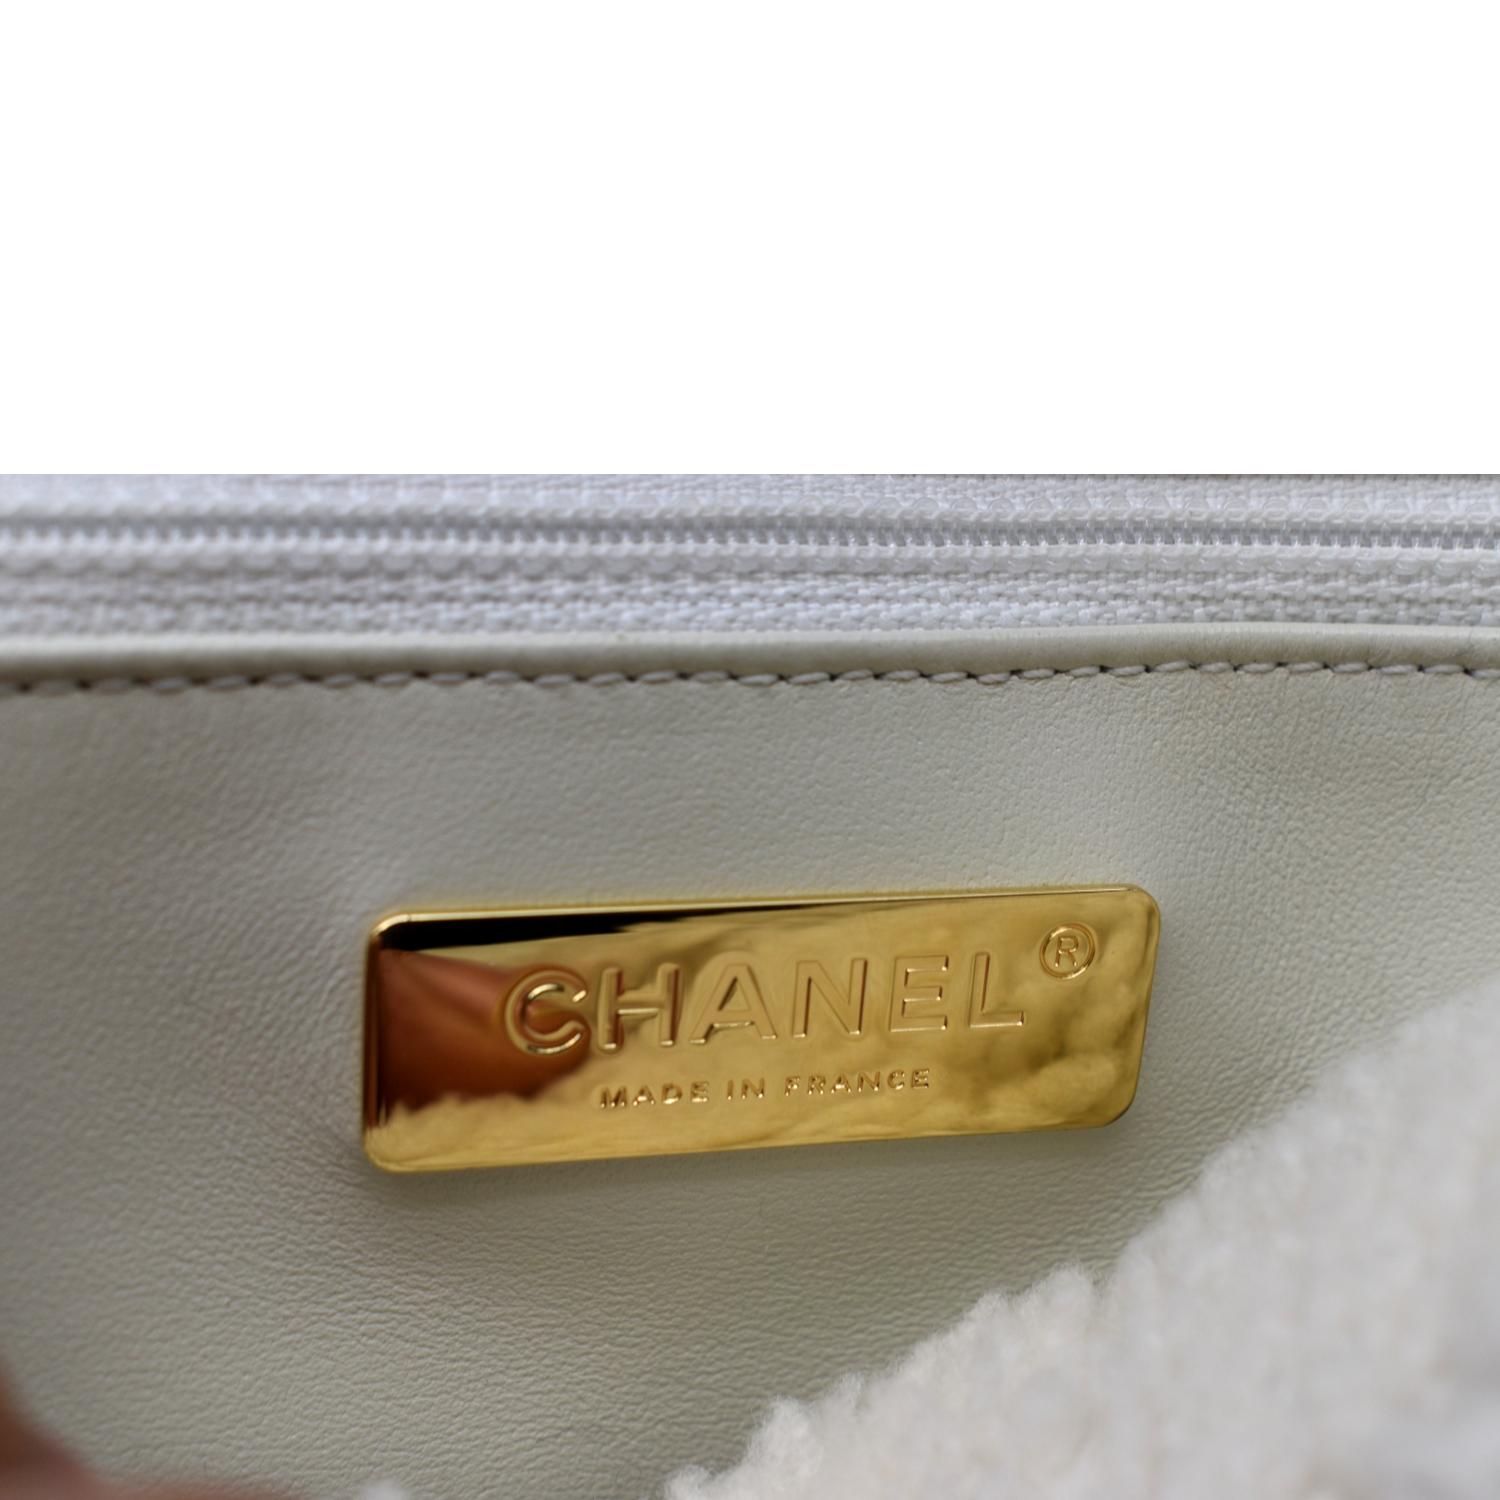 Chanel 19 Flap Shearling Patent Leather Shoulder Bag